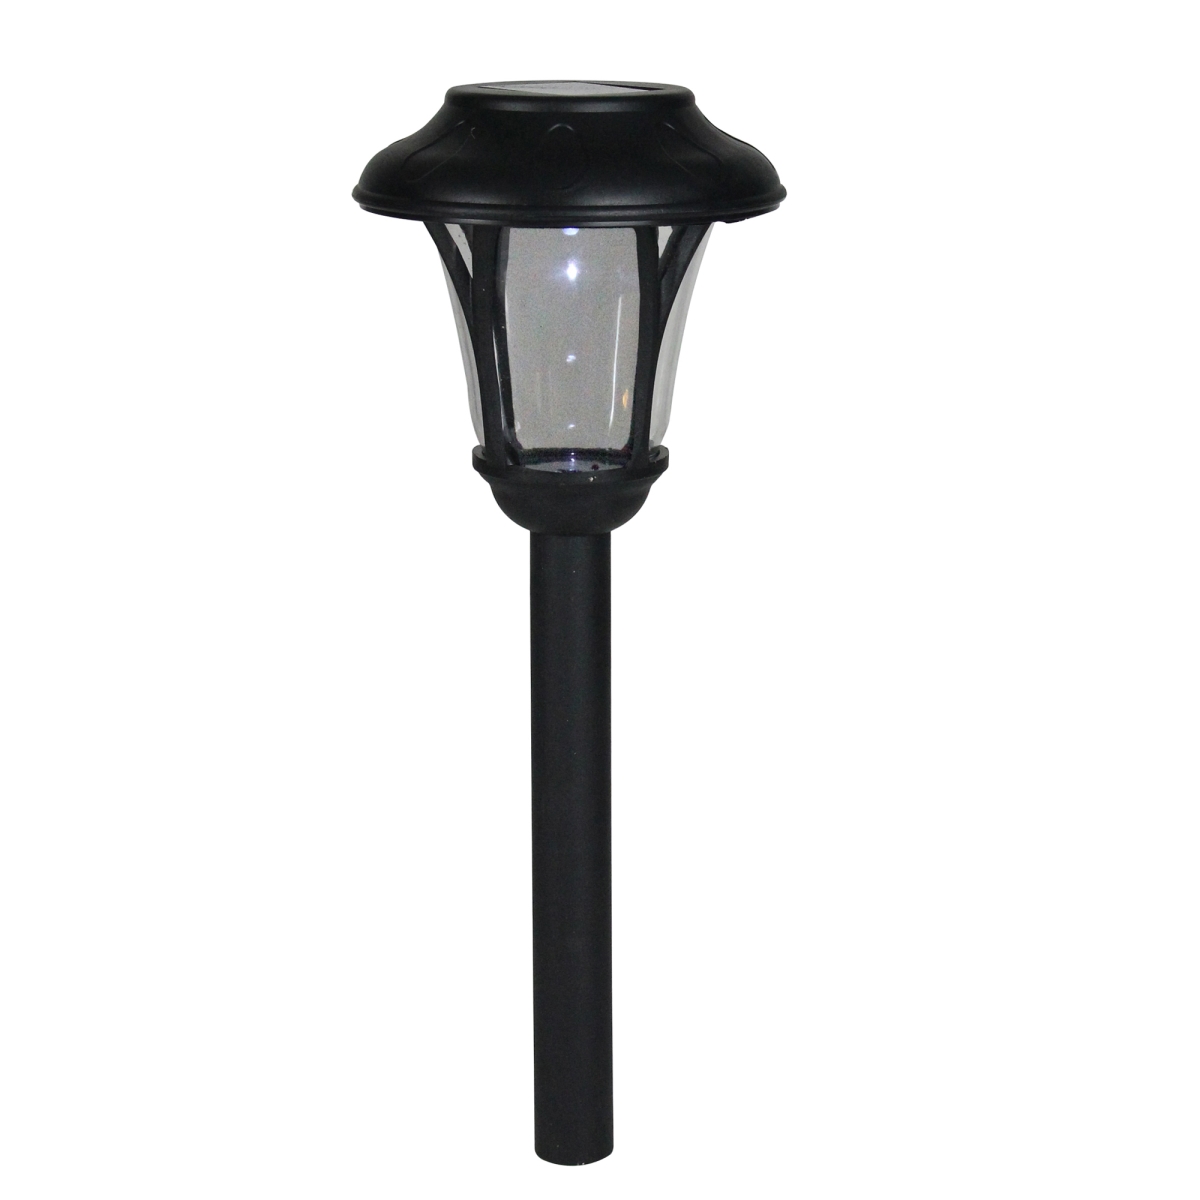 32816011 12 In. Black Lantern Solar Light With White Led Light & Lawn Stake